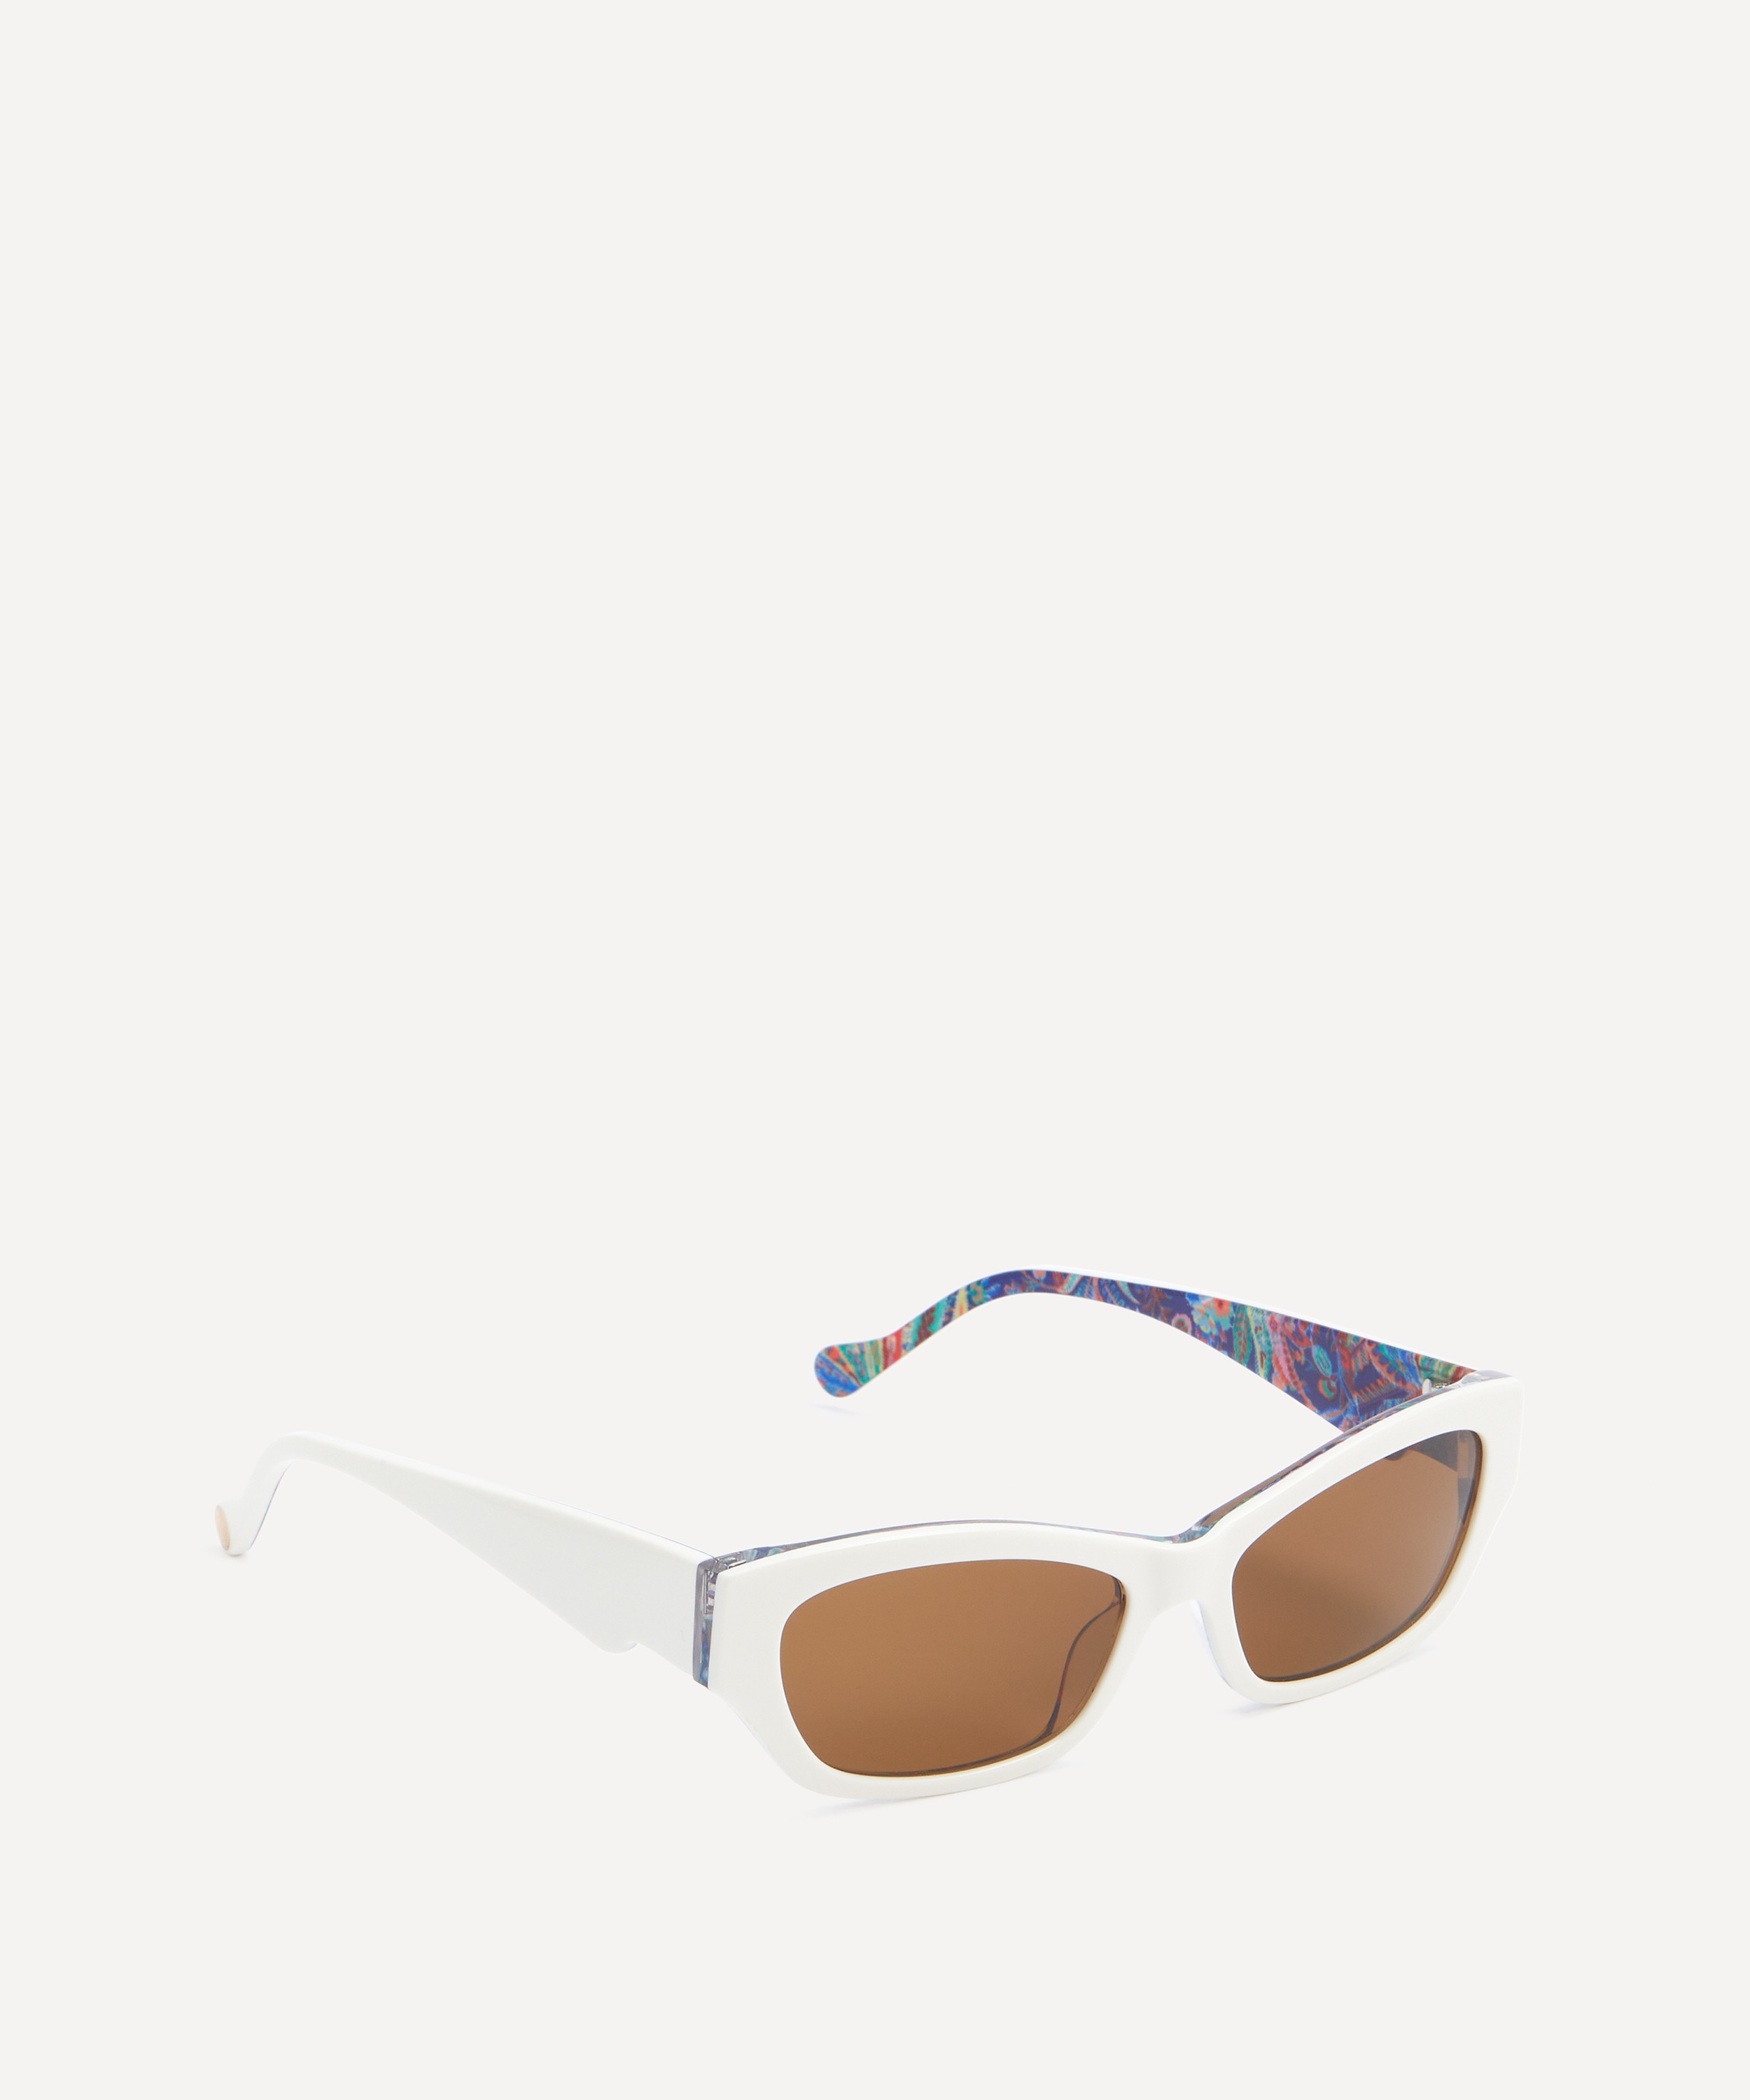 Liberty - Adelphi Voyage Angular Sunglasses image number 2